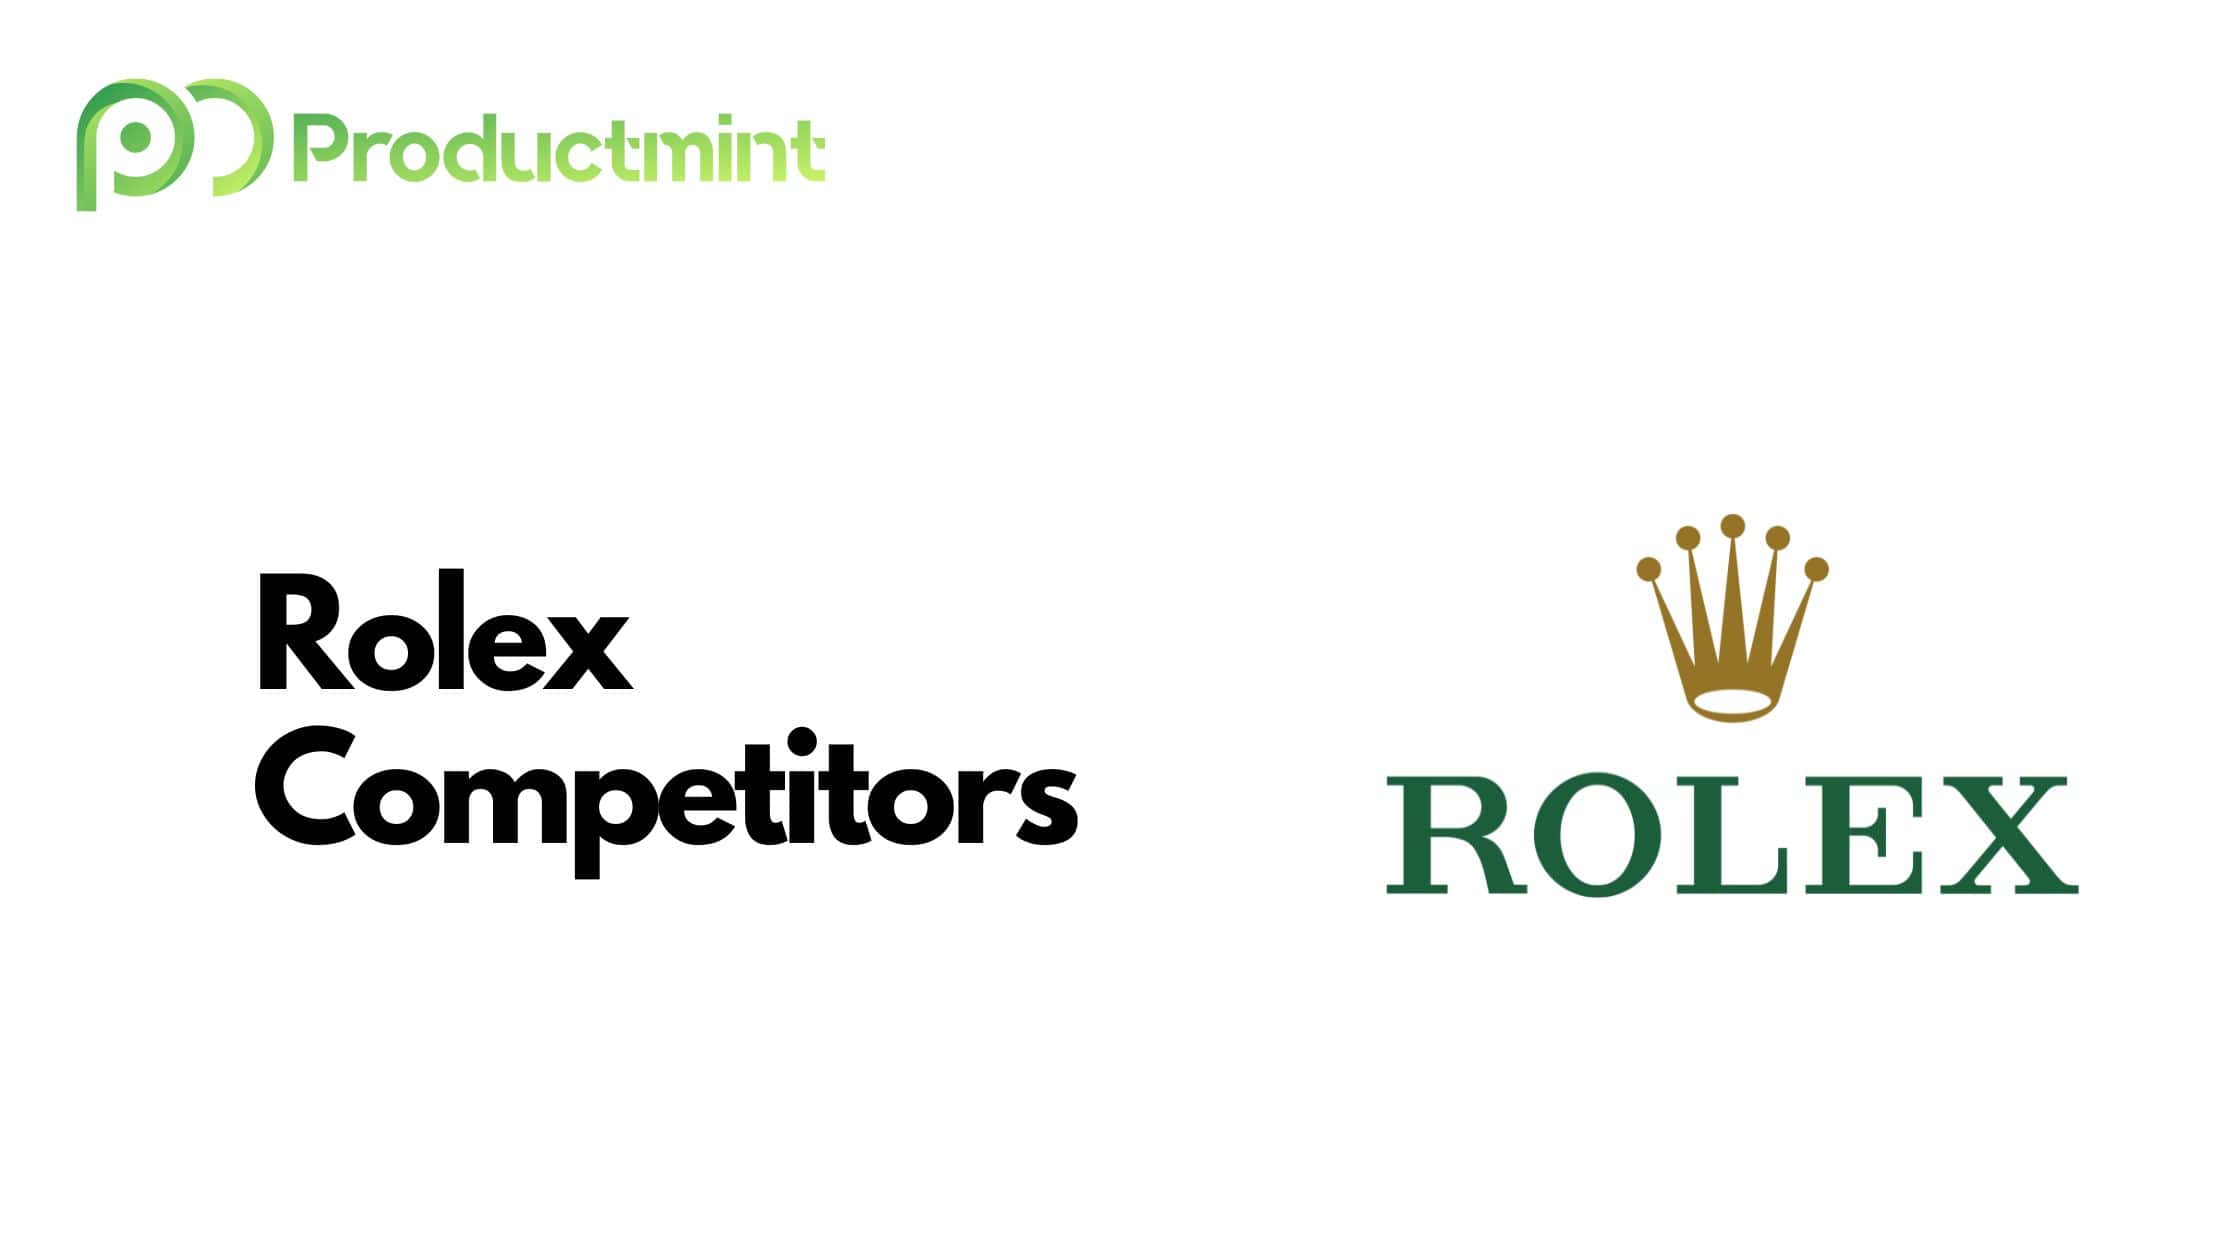 Rolex Competitors